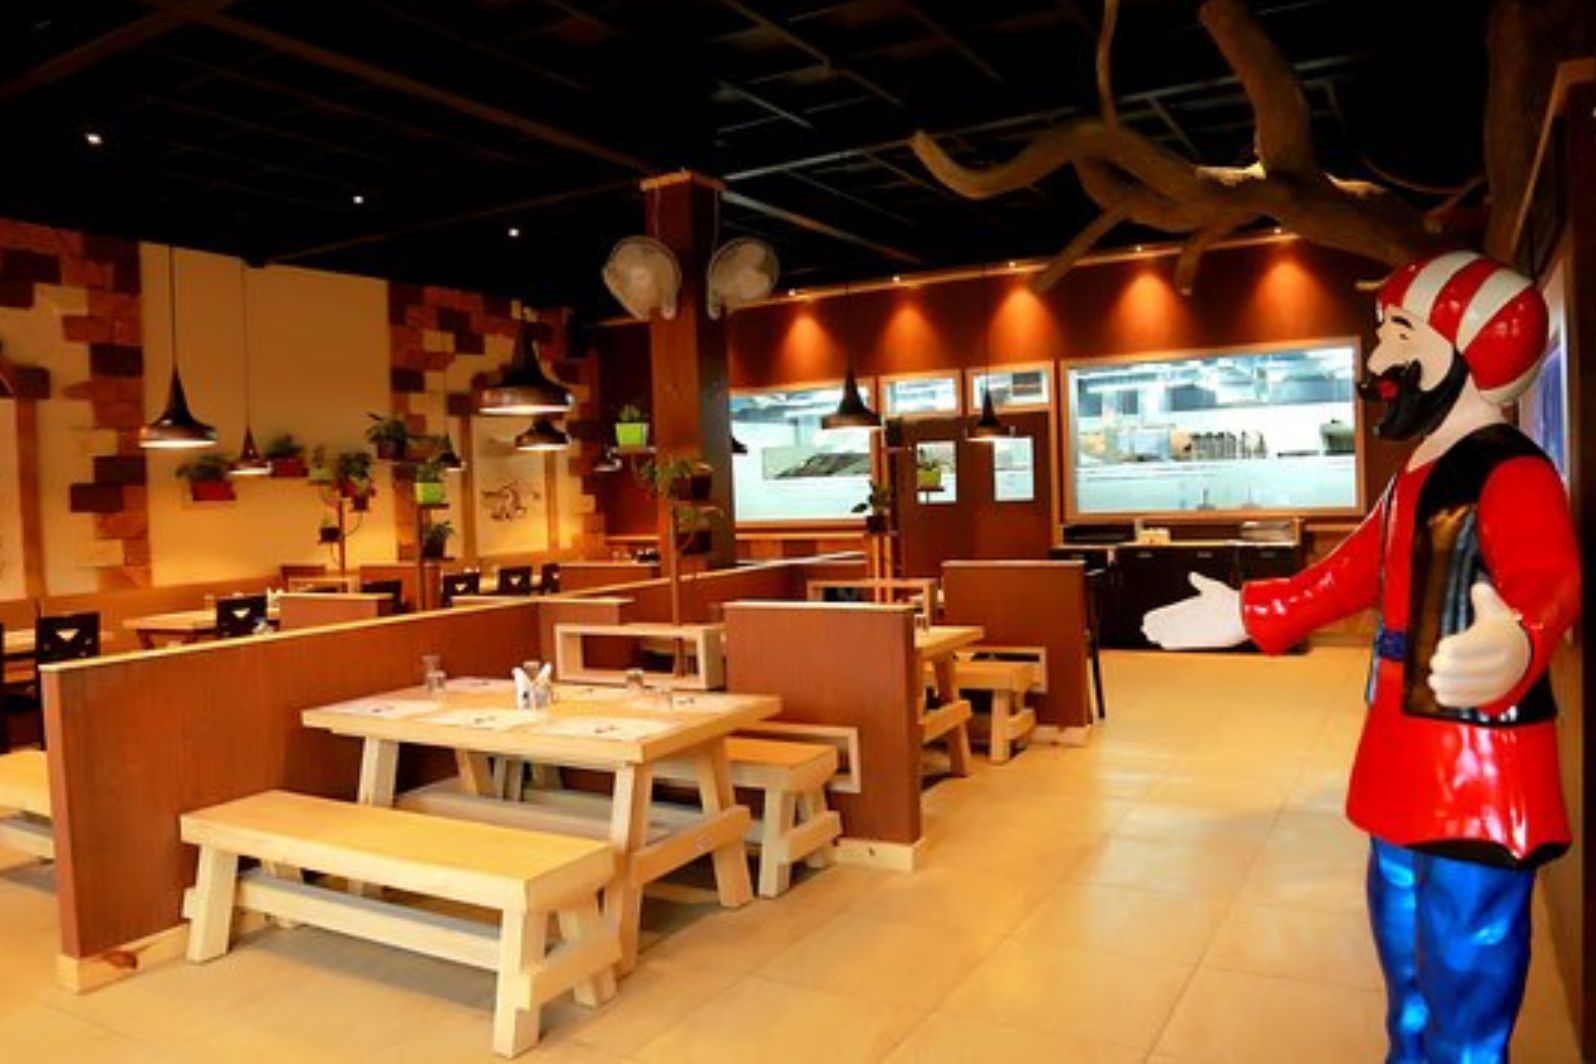 alibaba & 41 dishes munnar restaurant in kerala